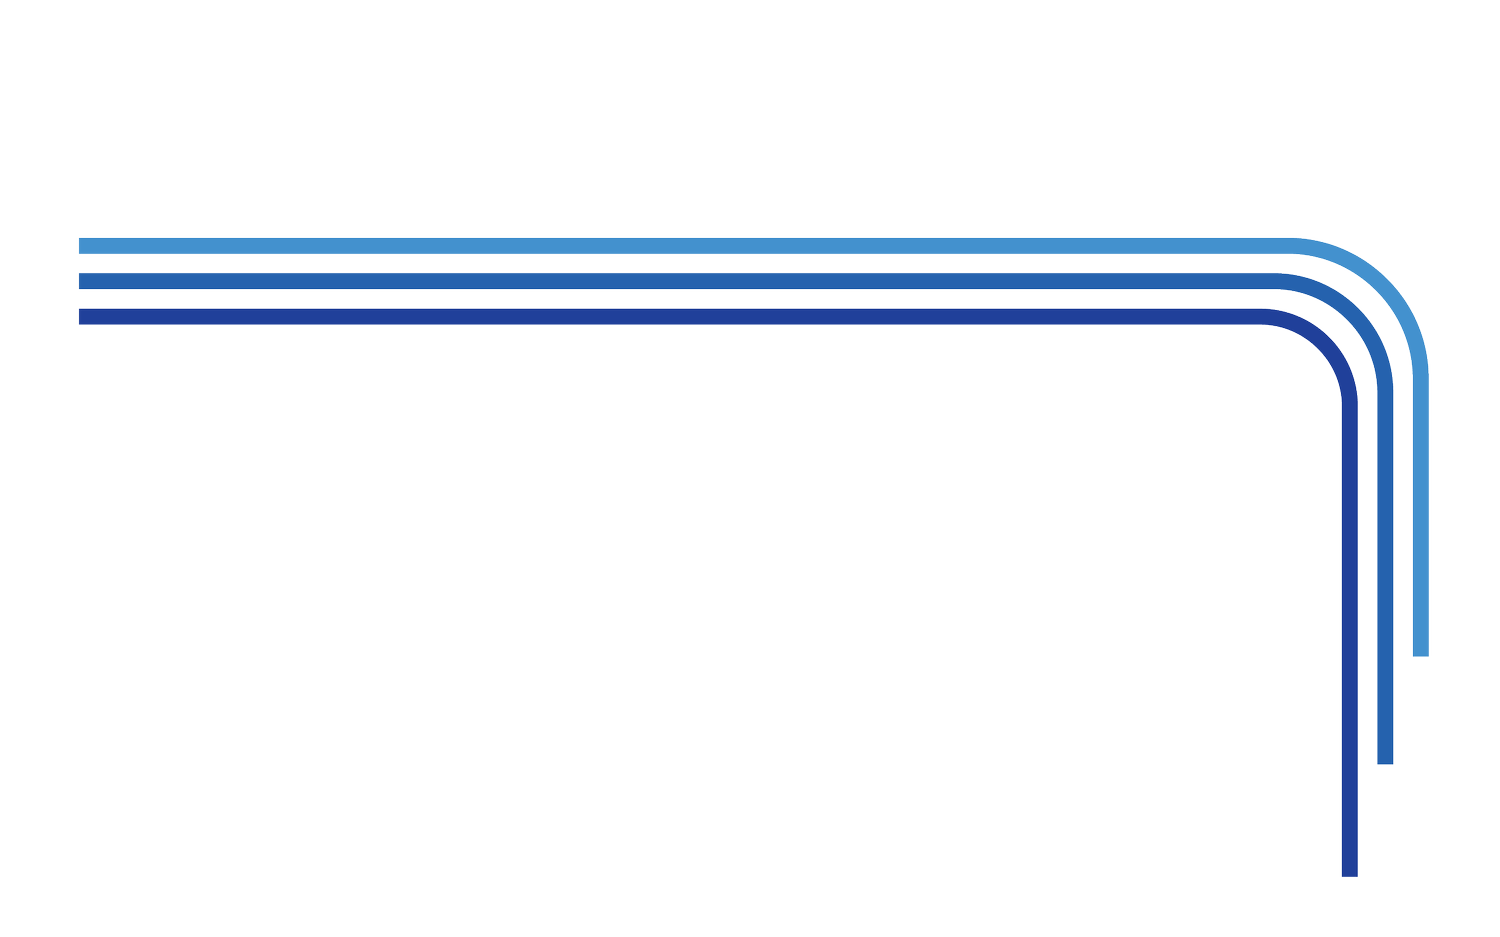 Simons Window Cleaning